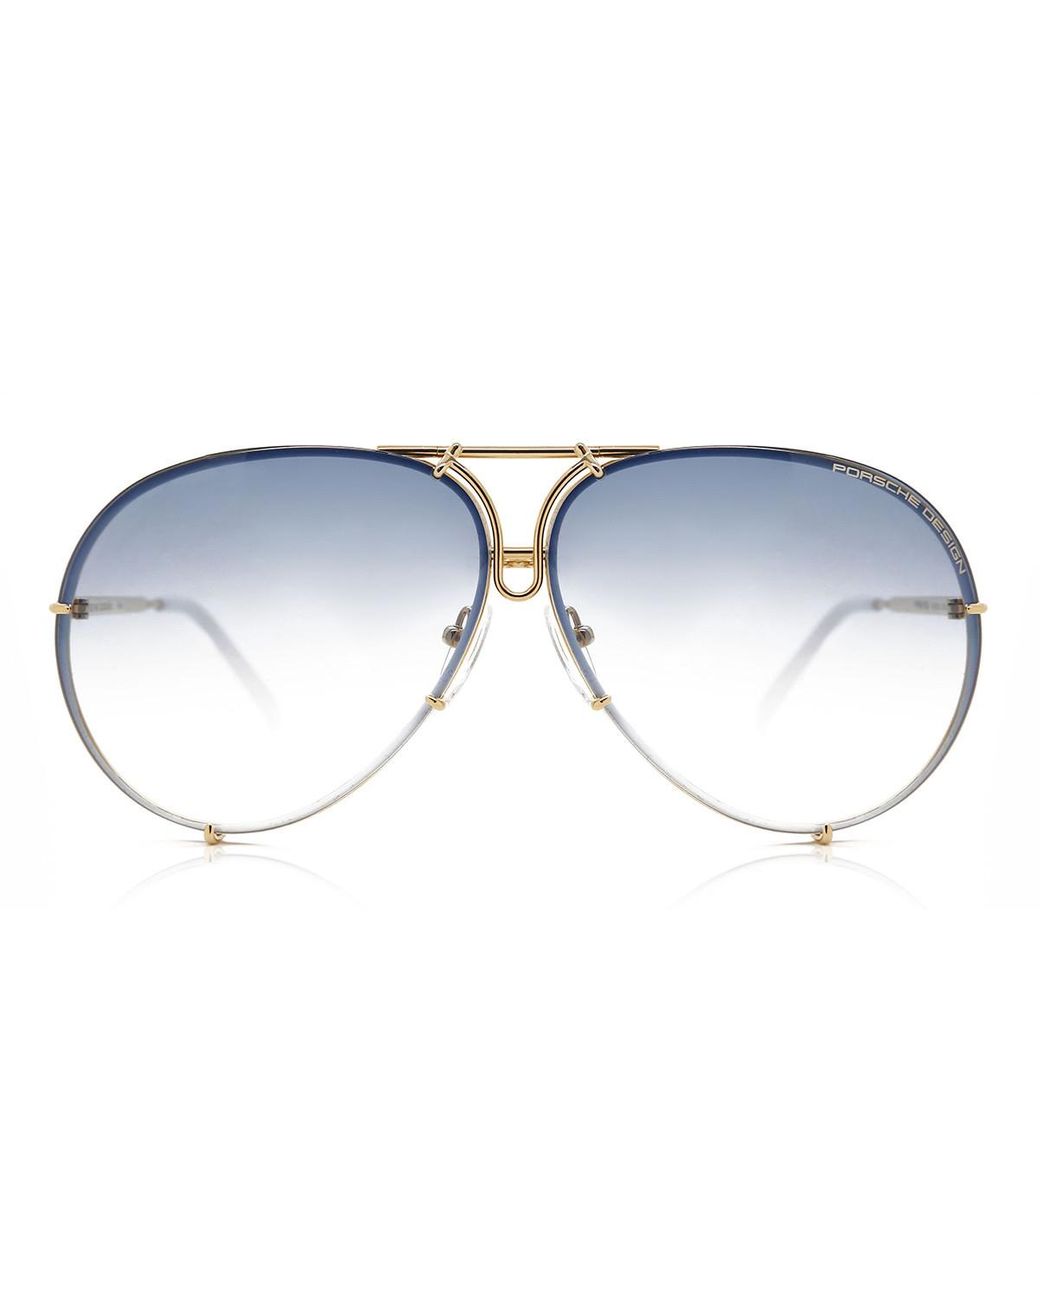 Porsche Design P8478 W Sunglasses in Gold (Metallic) for Men - Lyst